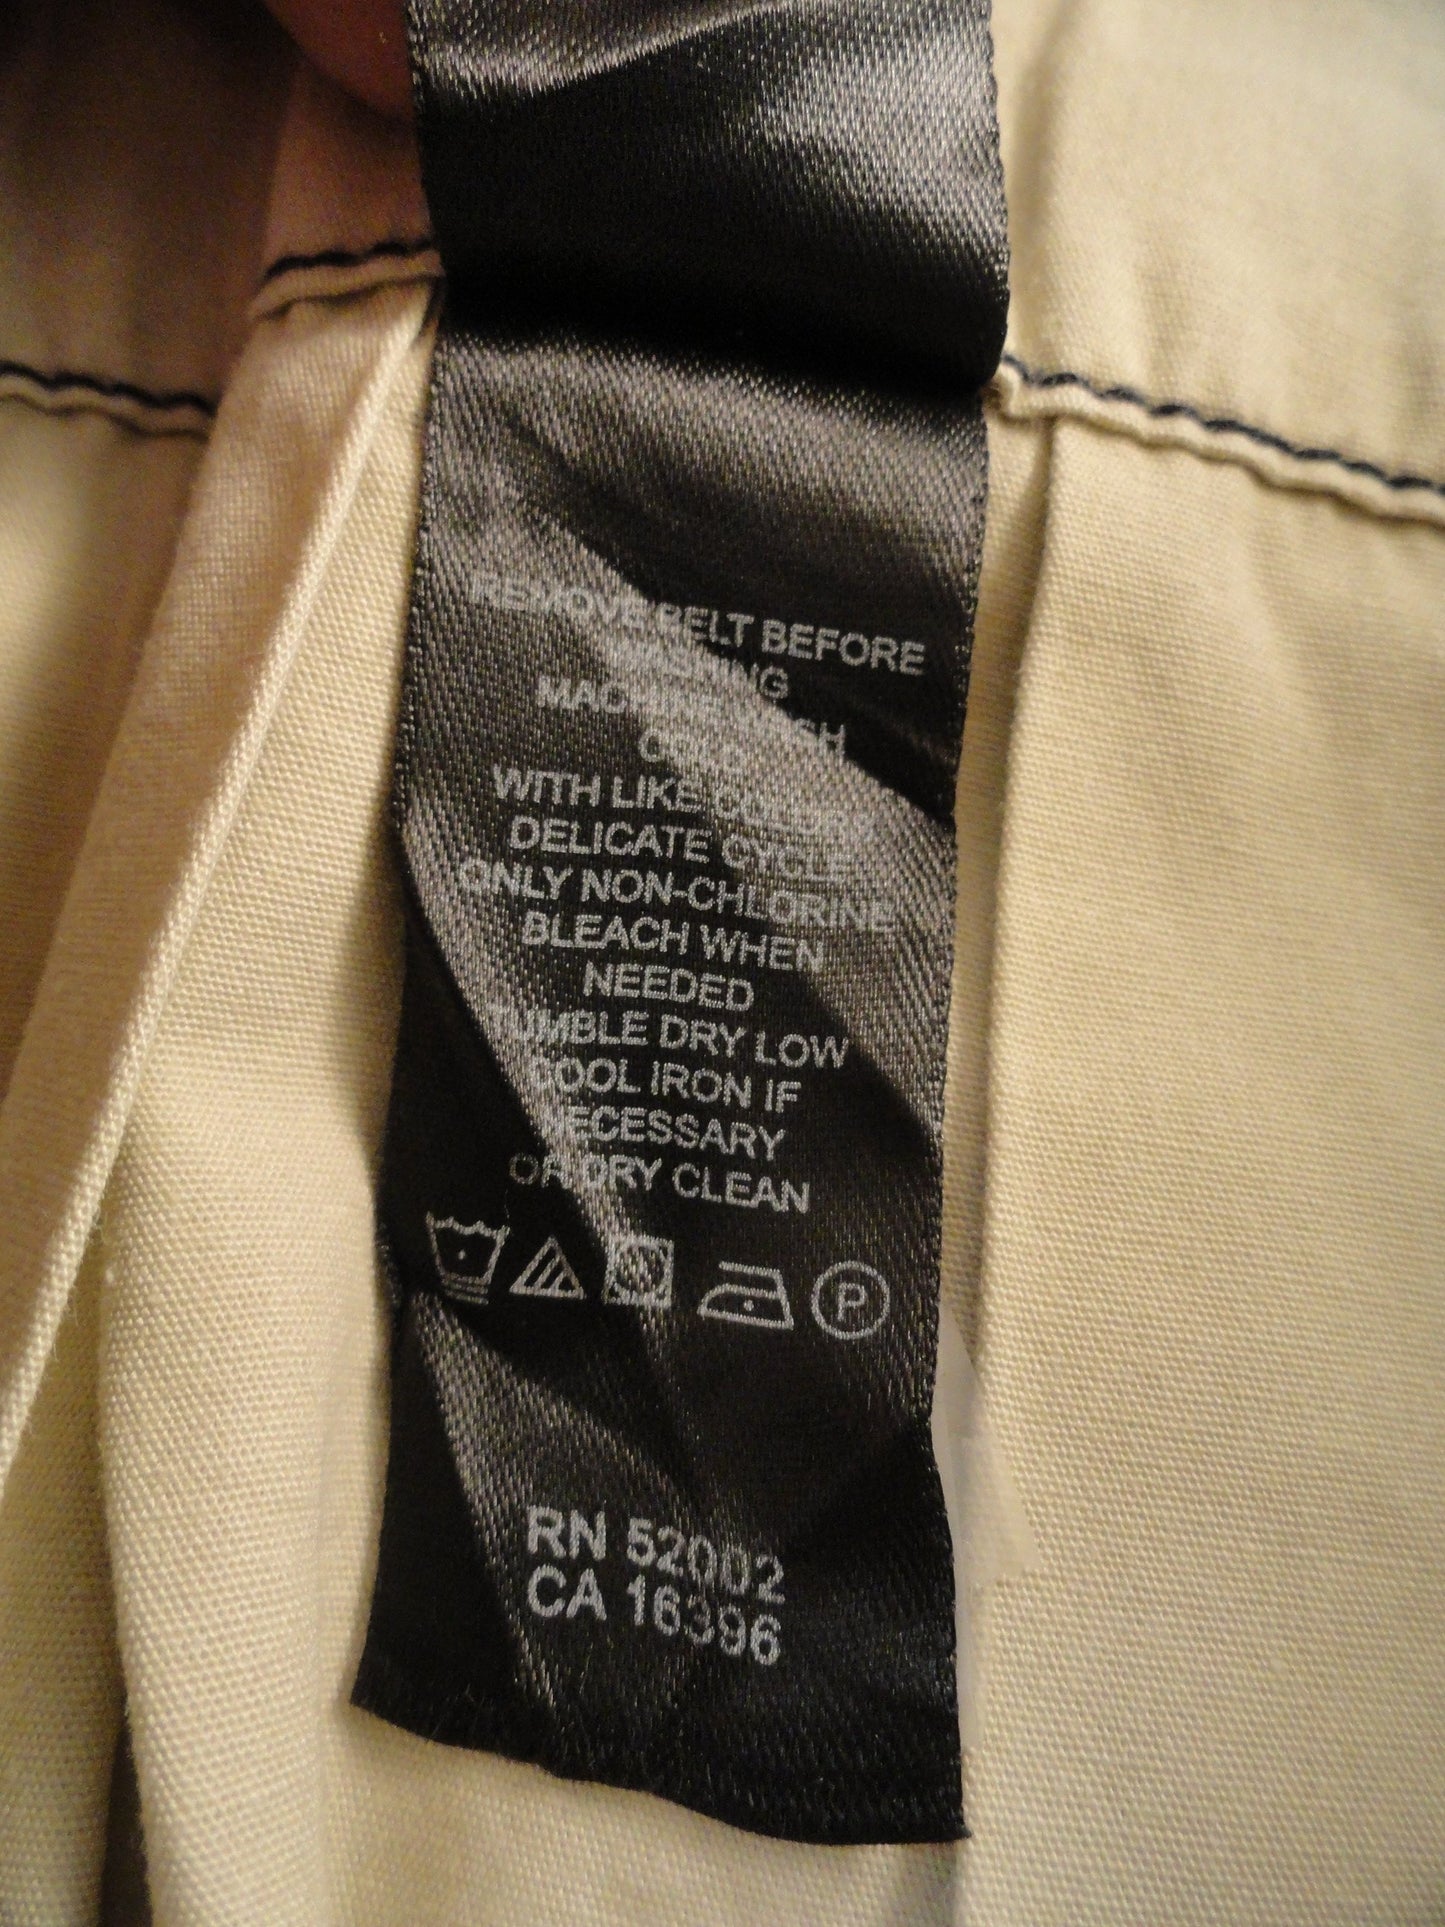 DKNY Jeans 70's Skirt Tan Size 6 SKU 000094 – Designers On A Dime